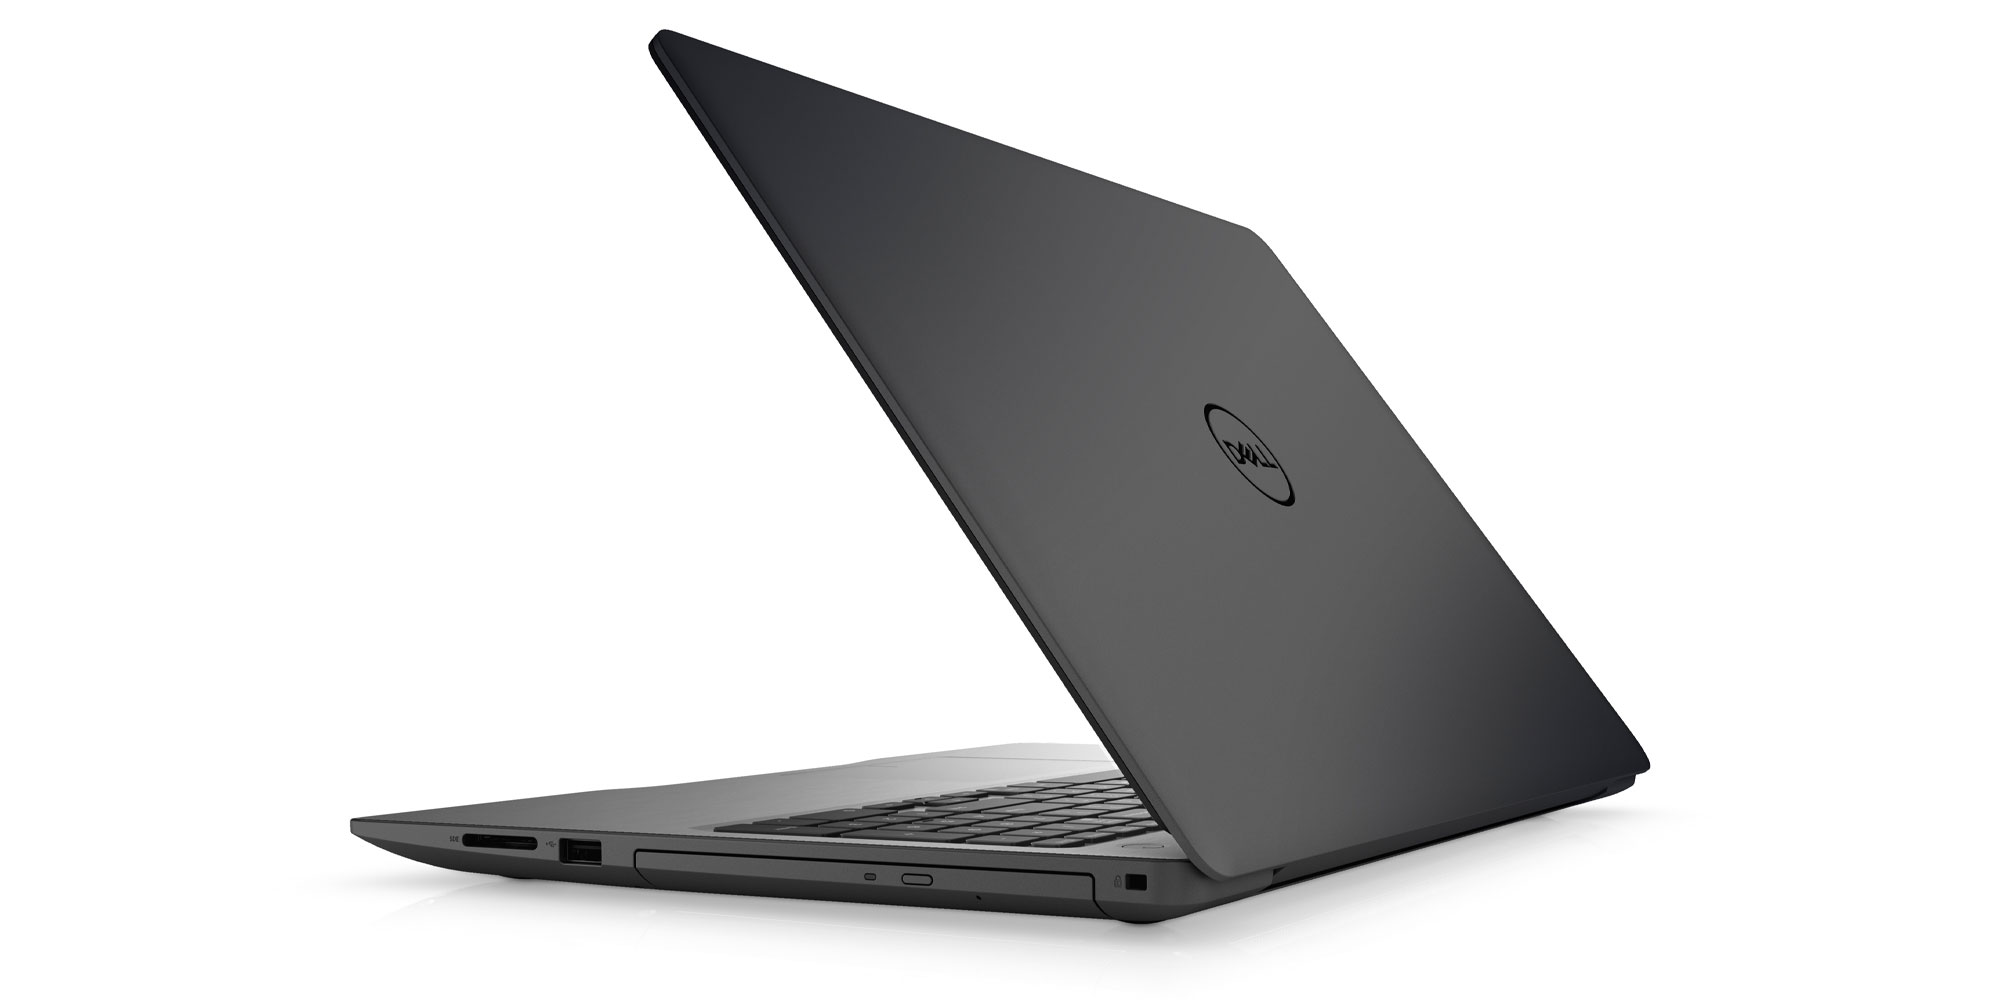 Dells Inspiron 5000 Laptop Packs A Ryzen 5 Processor 1tb Of Storage